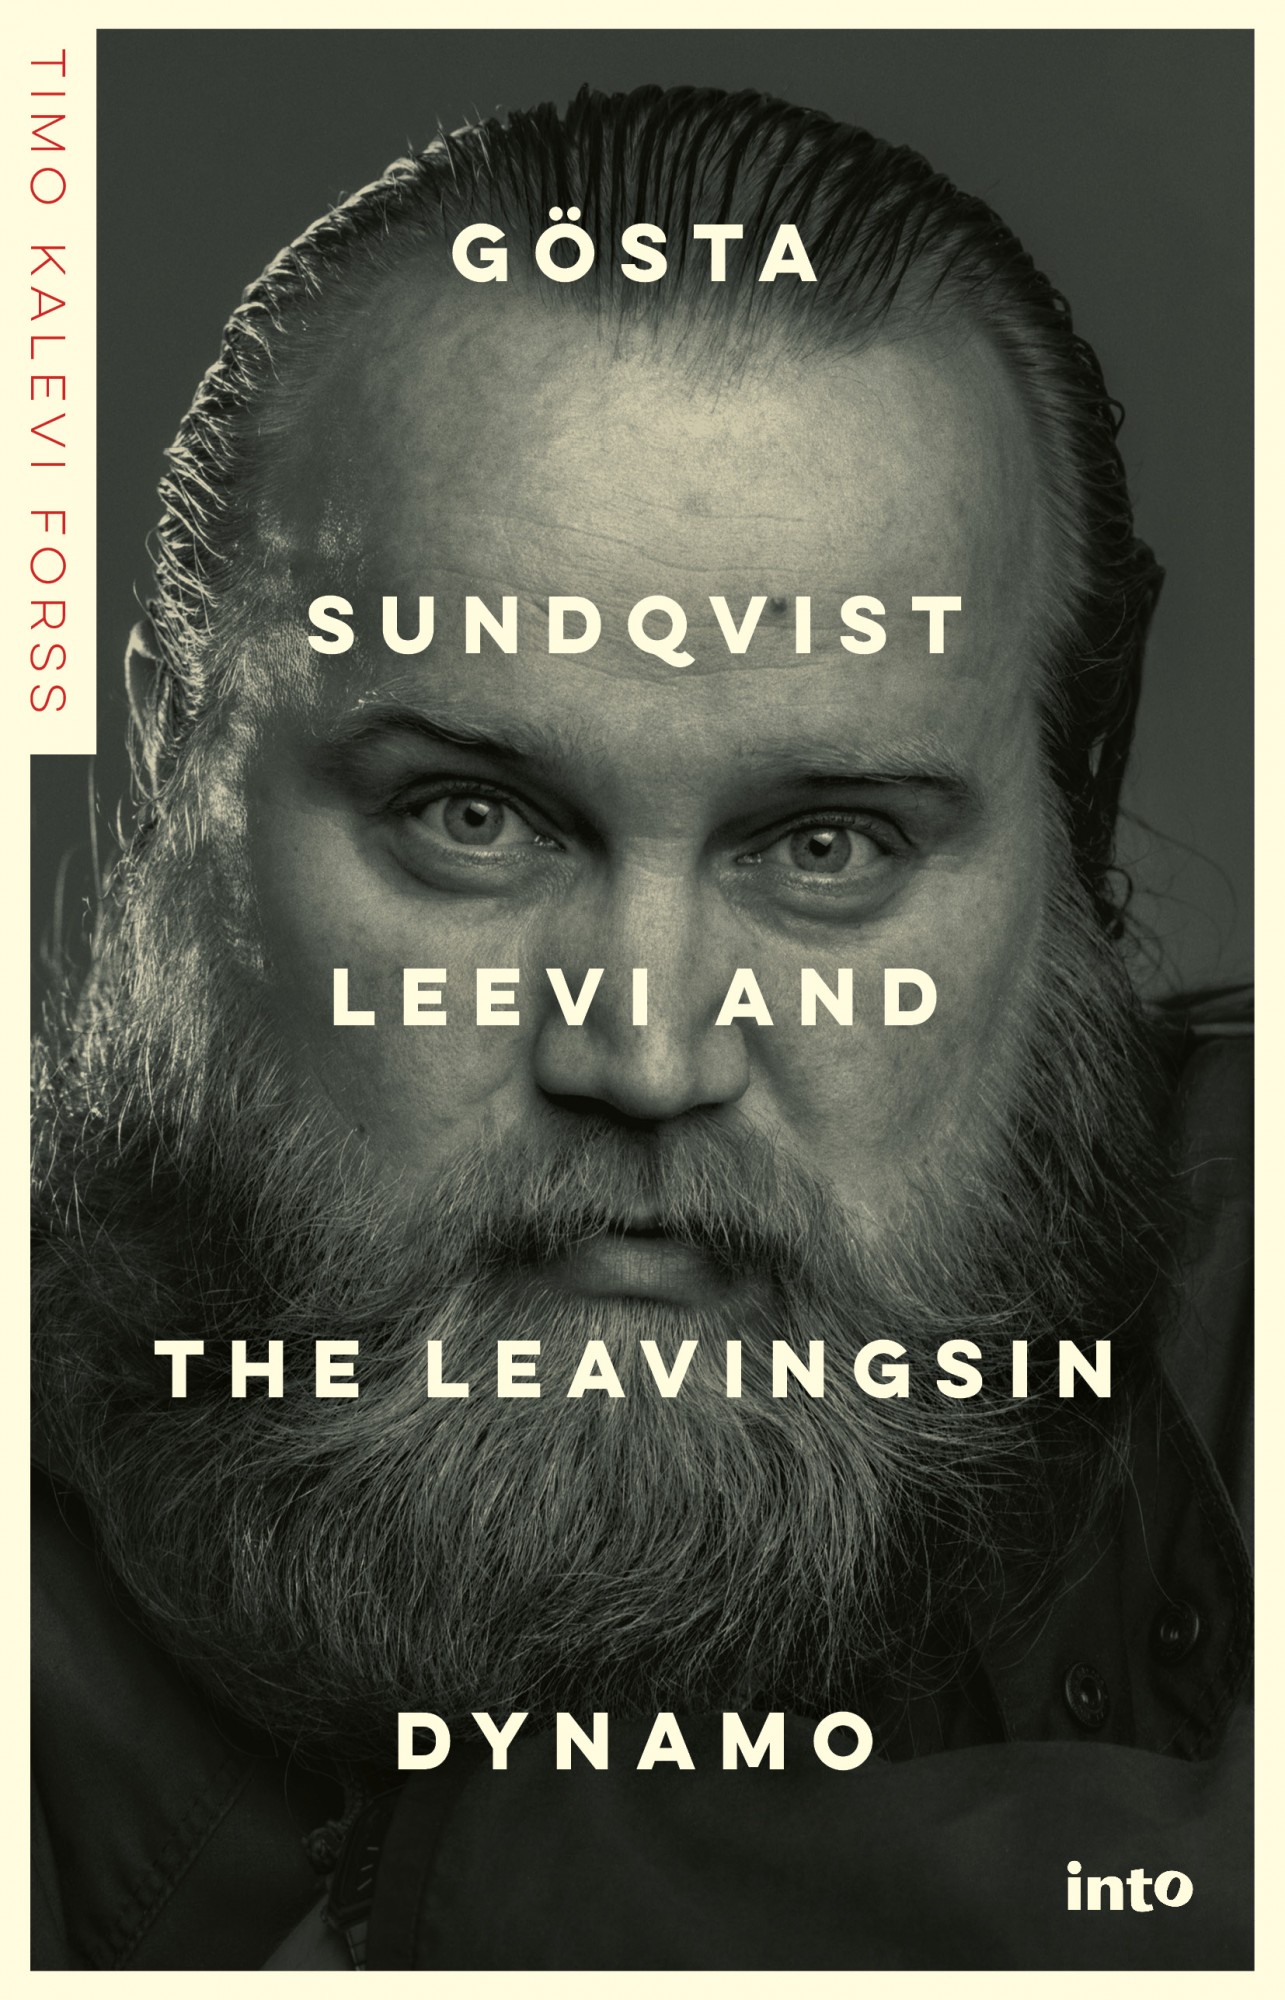 Forss, Timo Kalevi - Gösta Sundqvist: Leevi and the Leavingsin dynamo, ebook